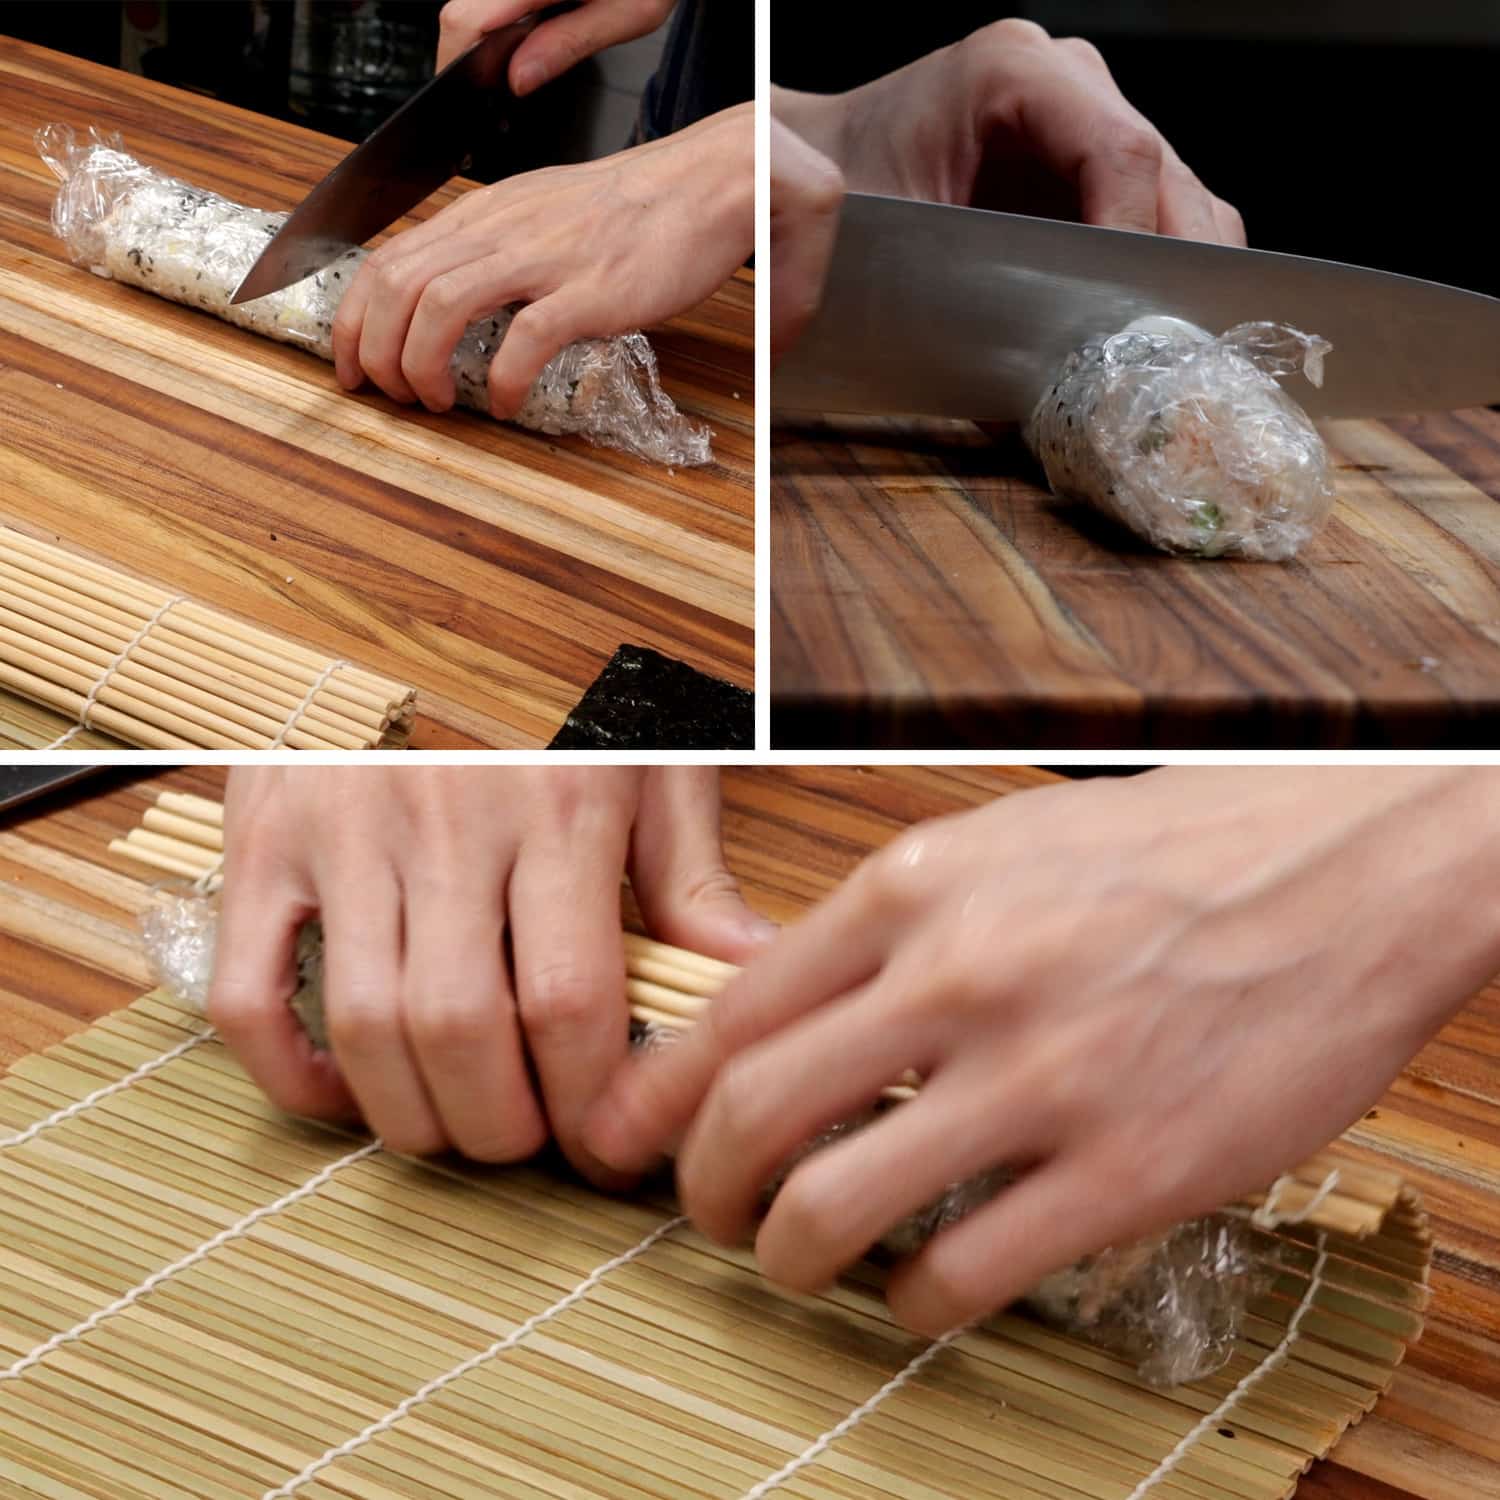 https://www.pressurecookrecipes.com/wp-content/uploads/2021/02/how-to-cut-sushi-rolls.jpg